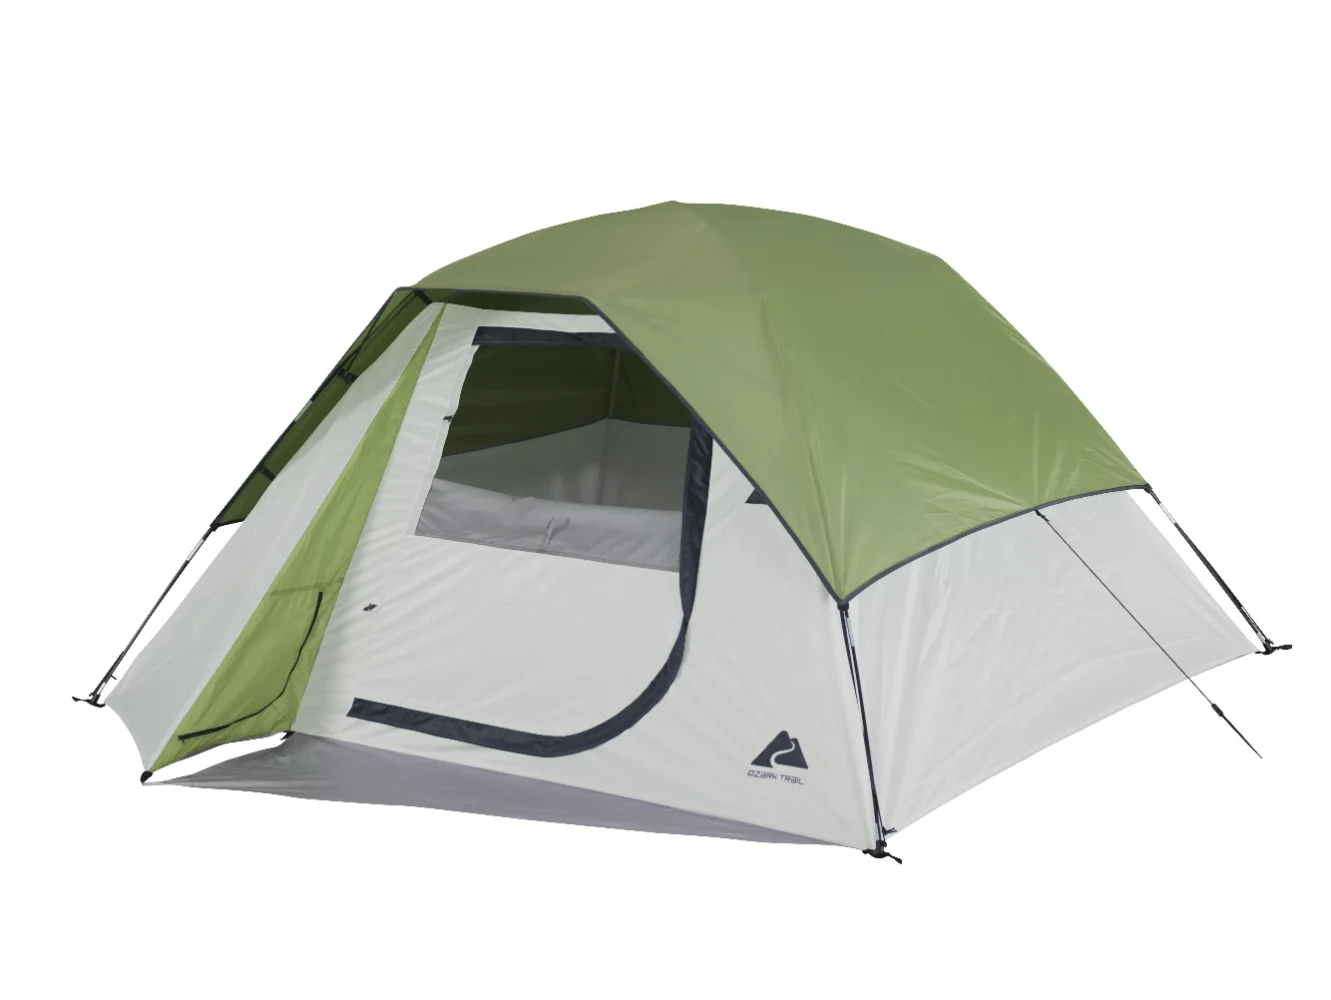 Ozark trail 4 person clip camp dome tent tents camping equipment ultralight tent thumb200